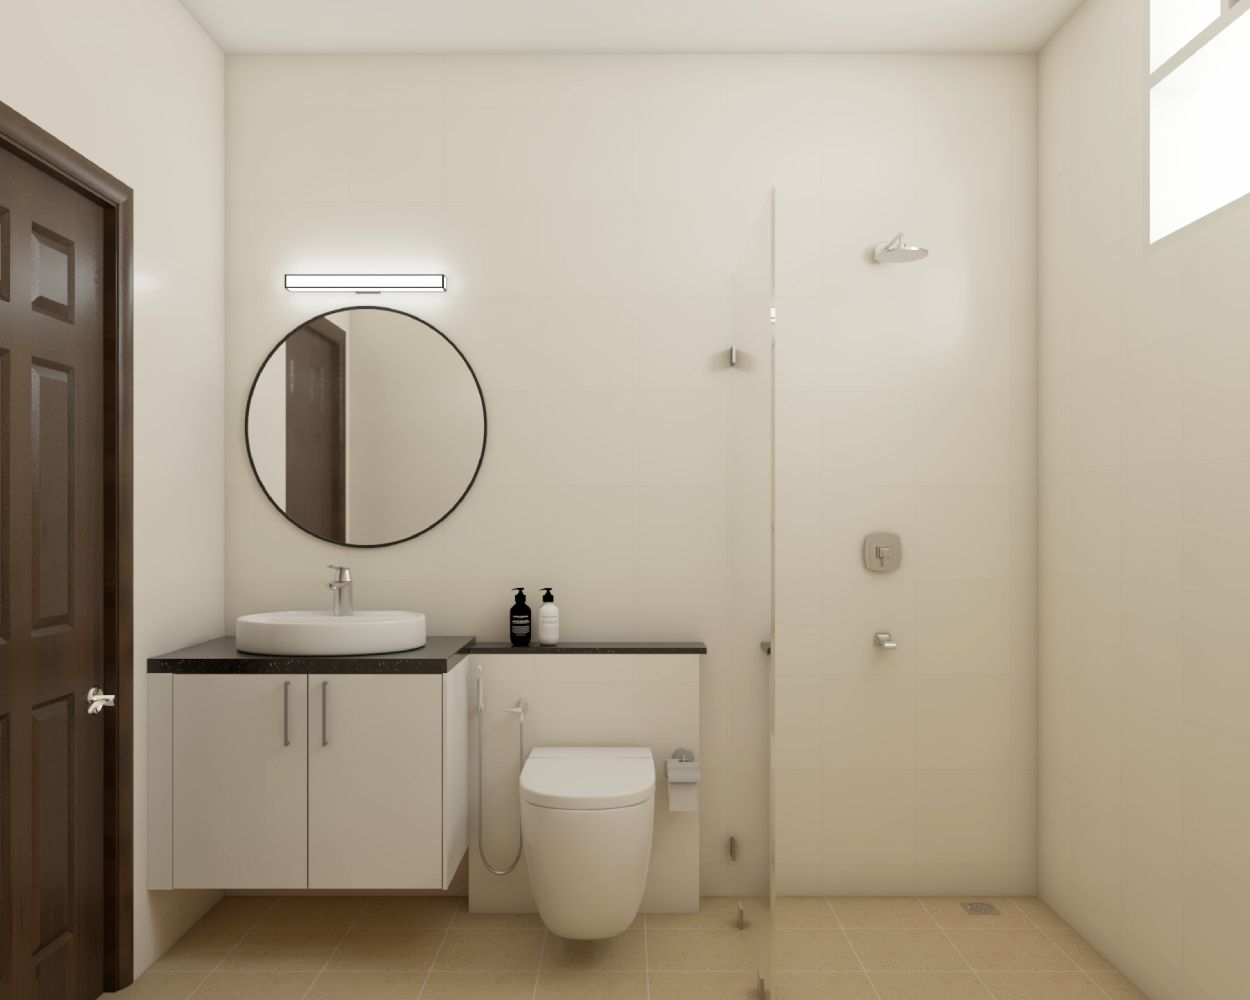 Minimal Cream-Toned Bathroom Design With Round Black-Framed Mirror